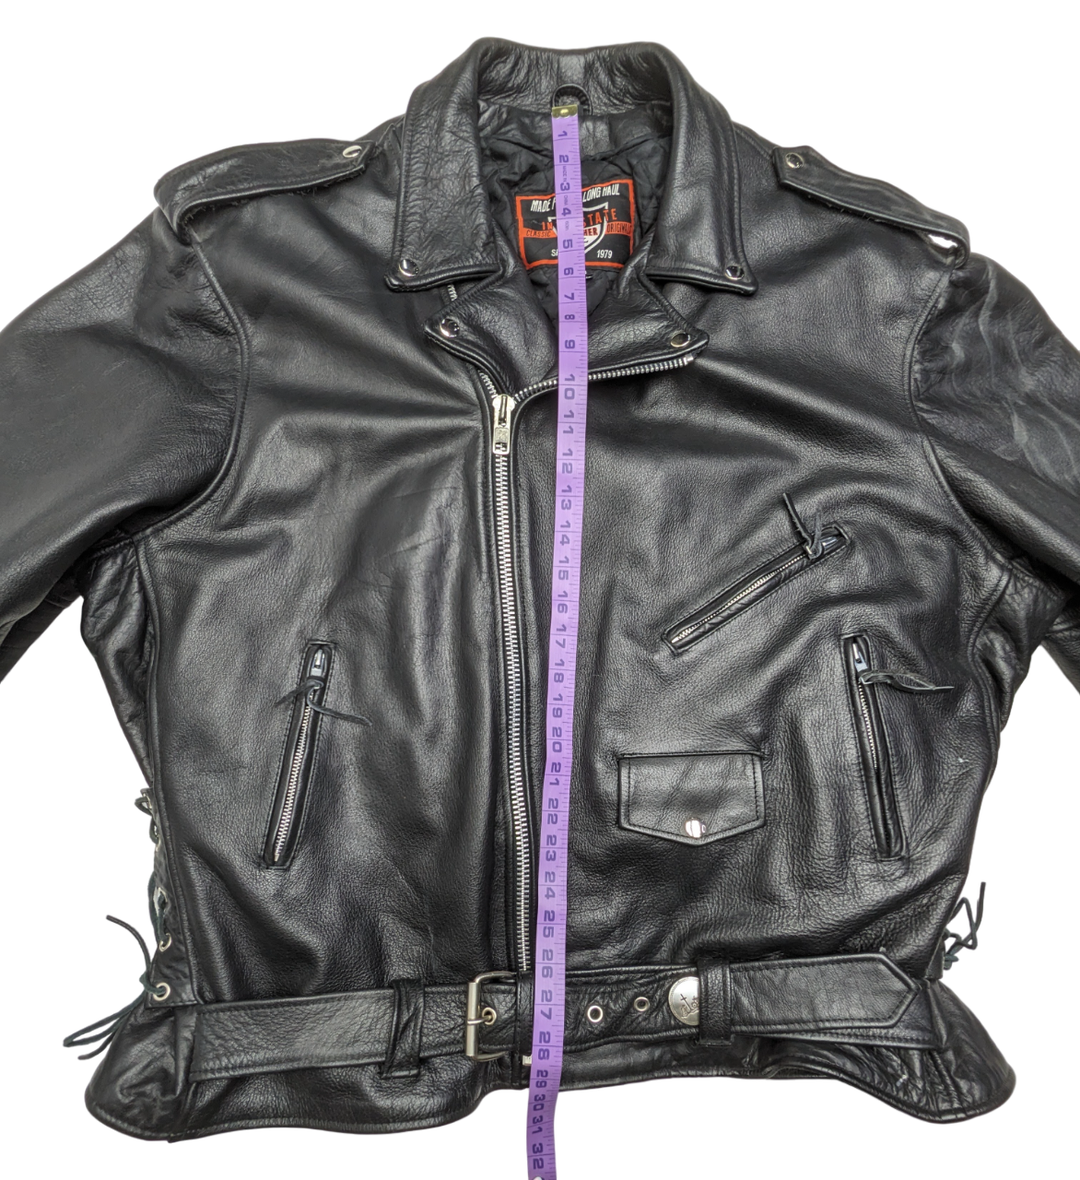 Black Leather Motorcycle Jacket 1 pc 7 lbs B0423216-05